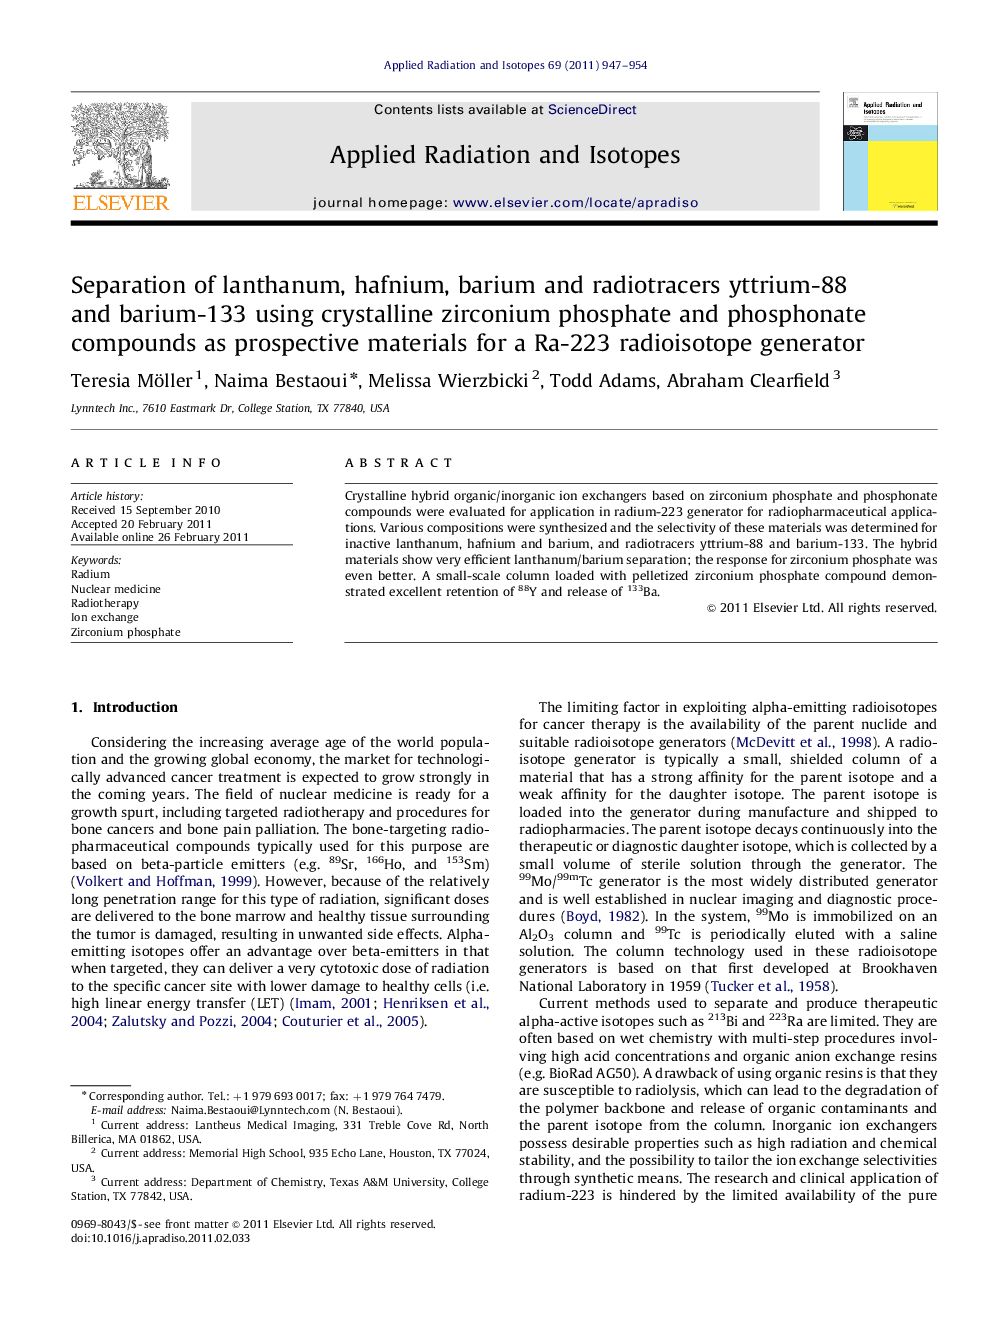 Separation of lanthanum, hafnium, barium and radiotracers yttrium-88 and barium-133 using crystalline zirconium phosphate and phosphonate compounds as prospective materials for a Ra-223 radioisotope generator